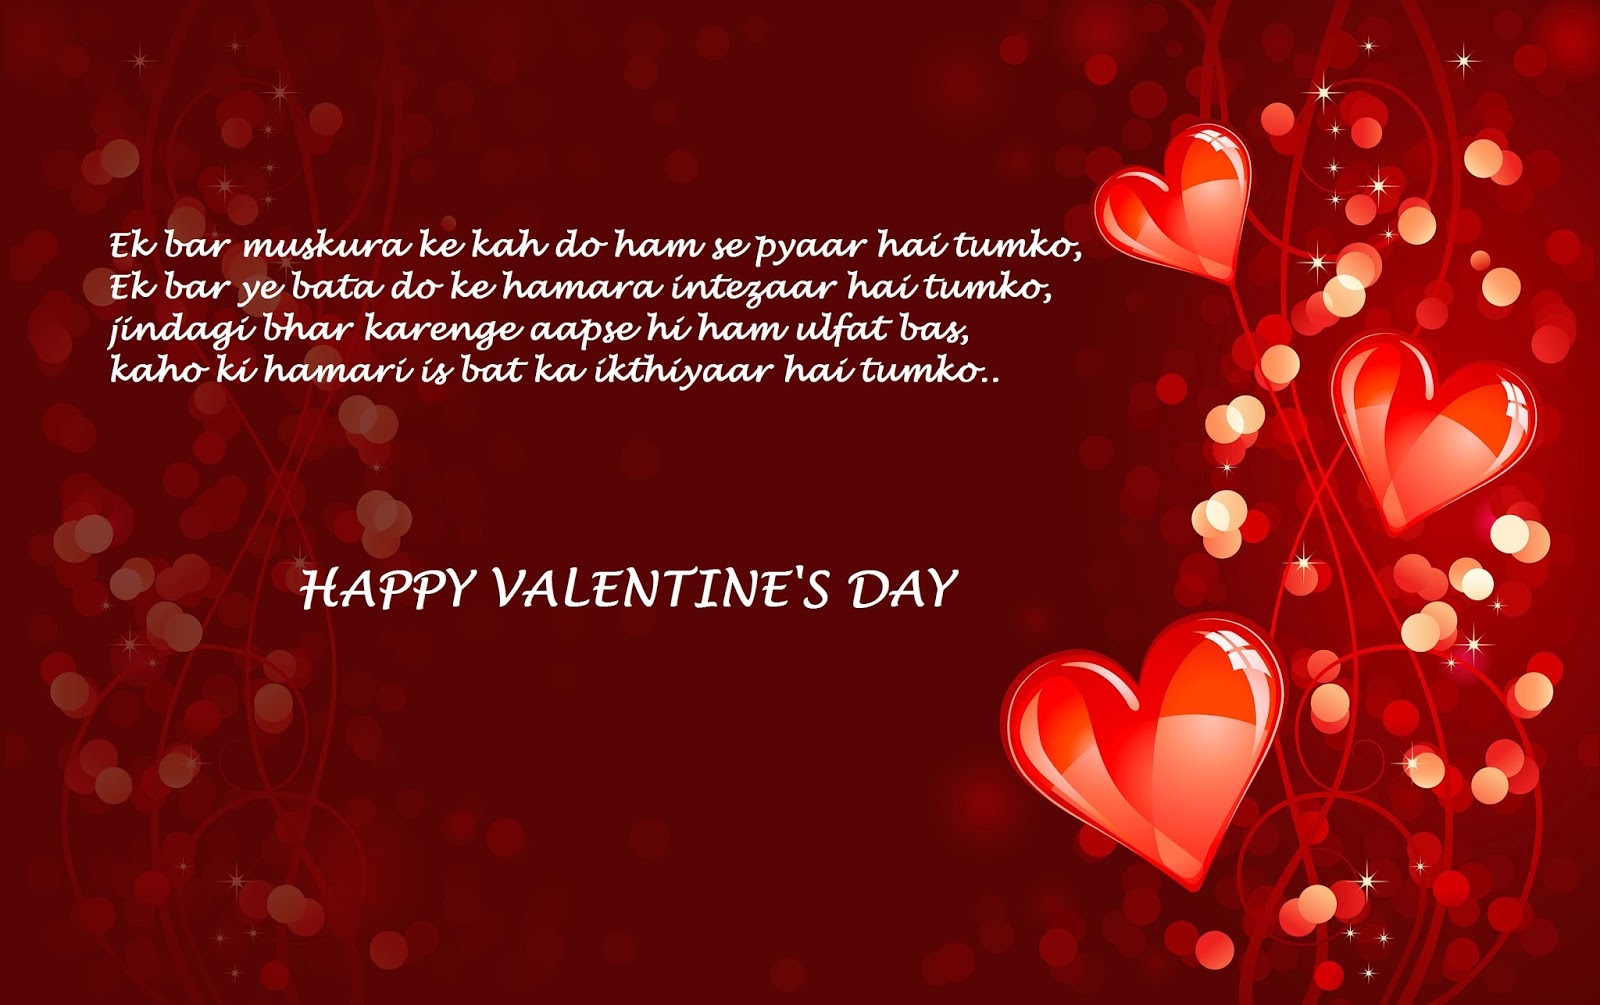 Happy Valentines Day Quotes, Status And Shayari In Hindi And English